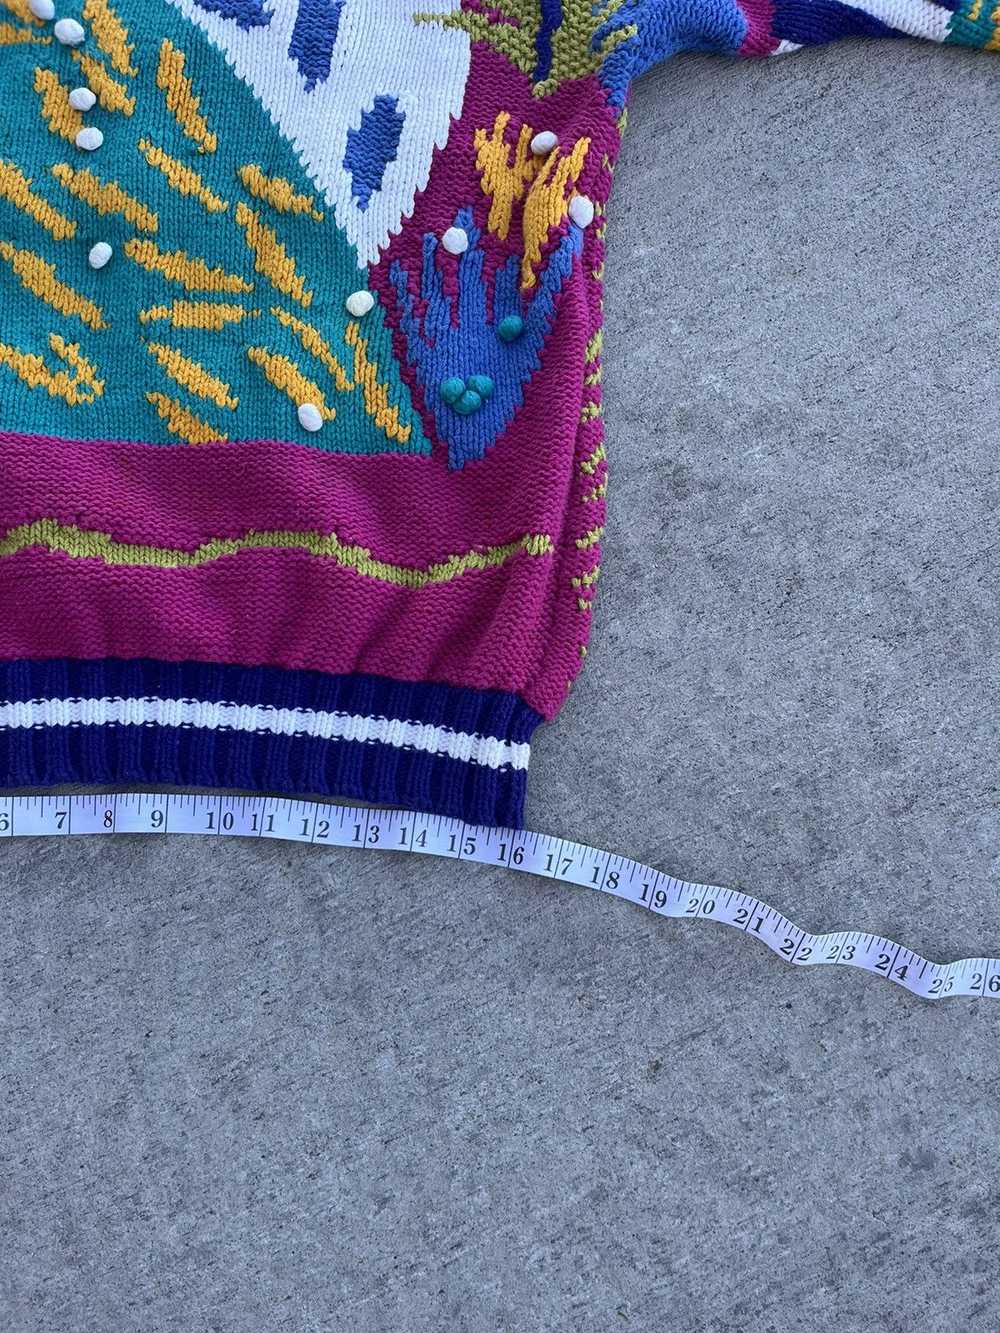 Designer Carducci Sweater Multi Color Knit Size L - image 3